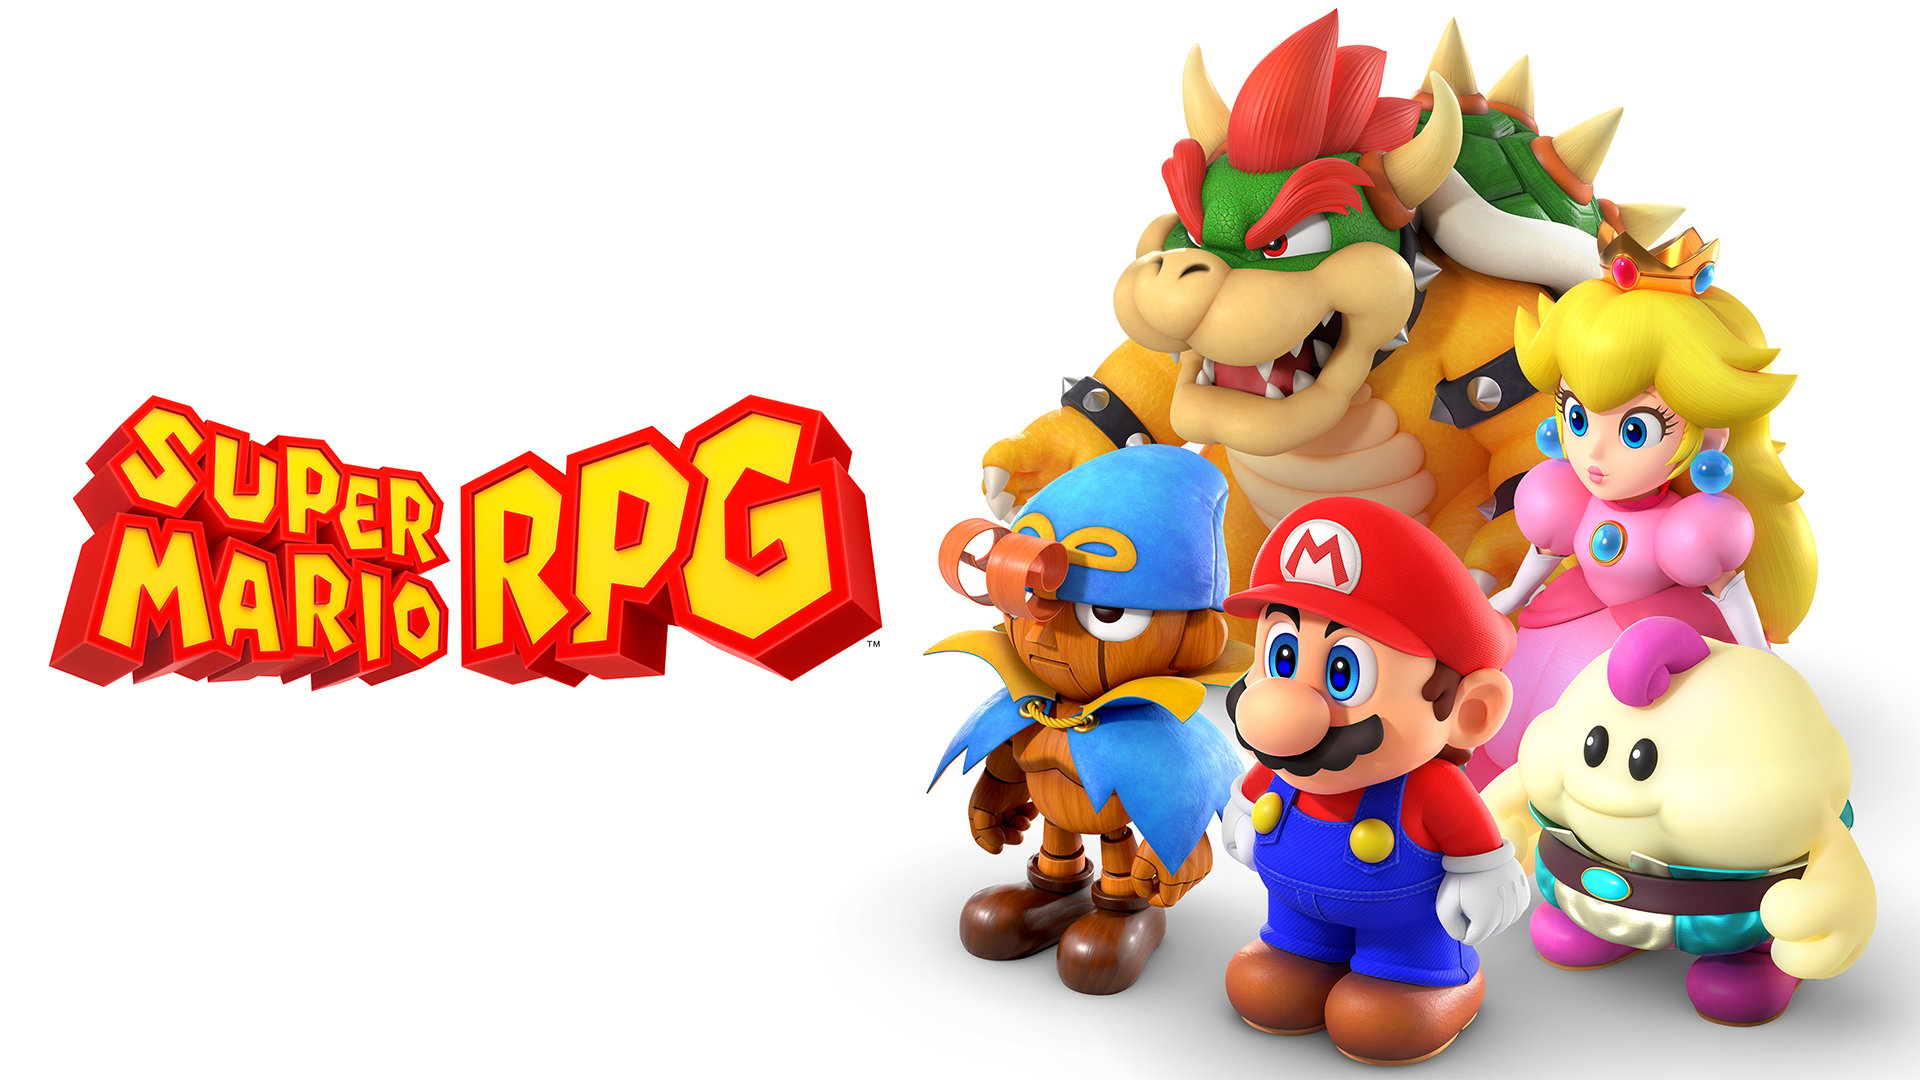 Super Mario RPG فروش فوق‌العاده‌ای در کشور ژاپن داشته است